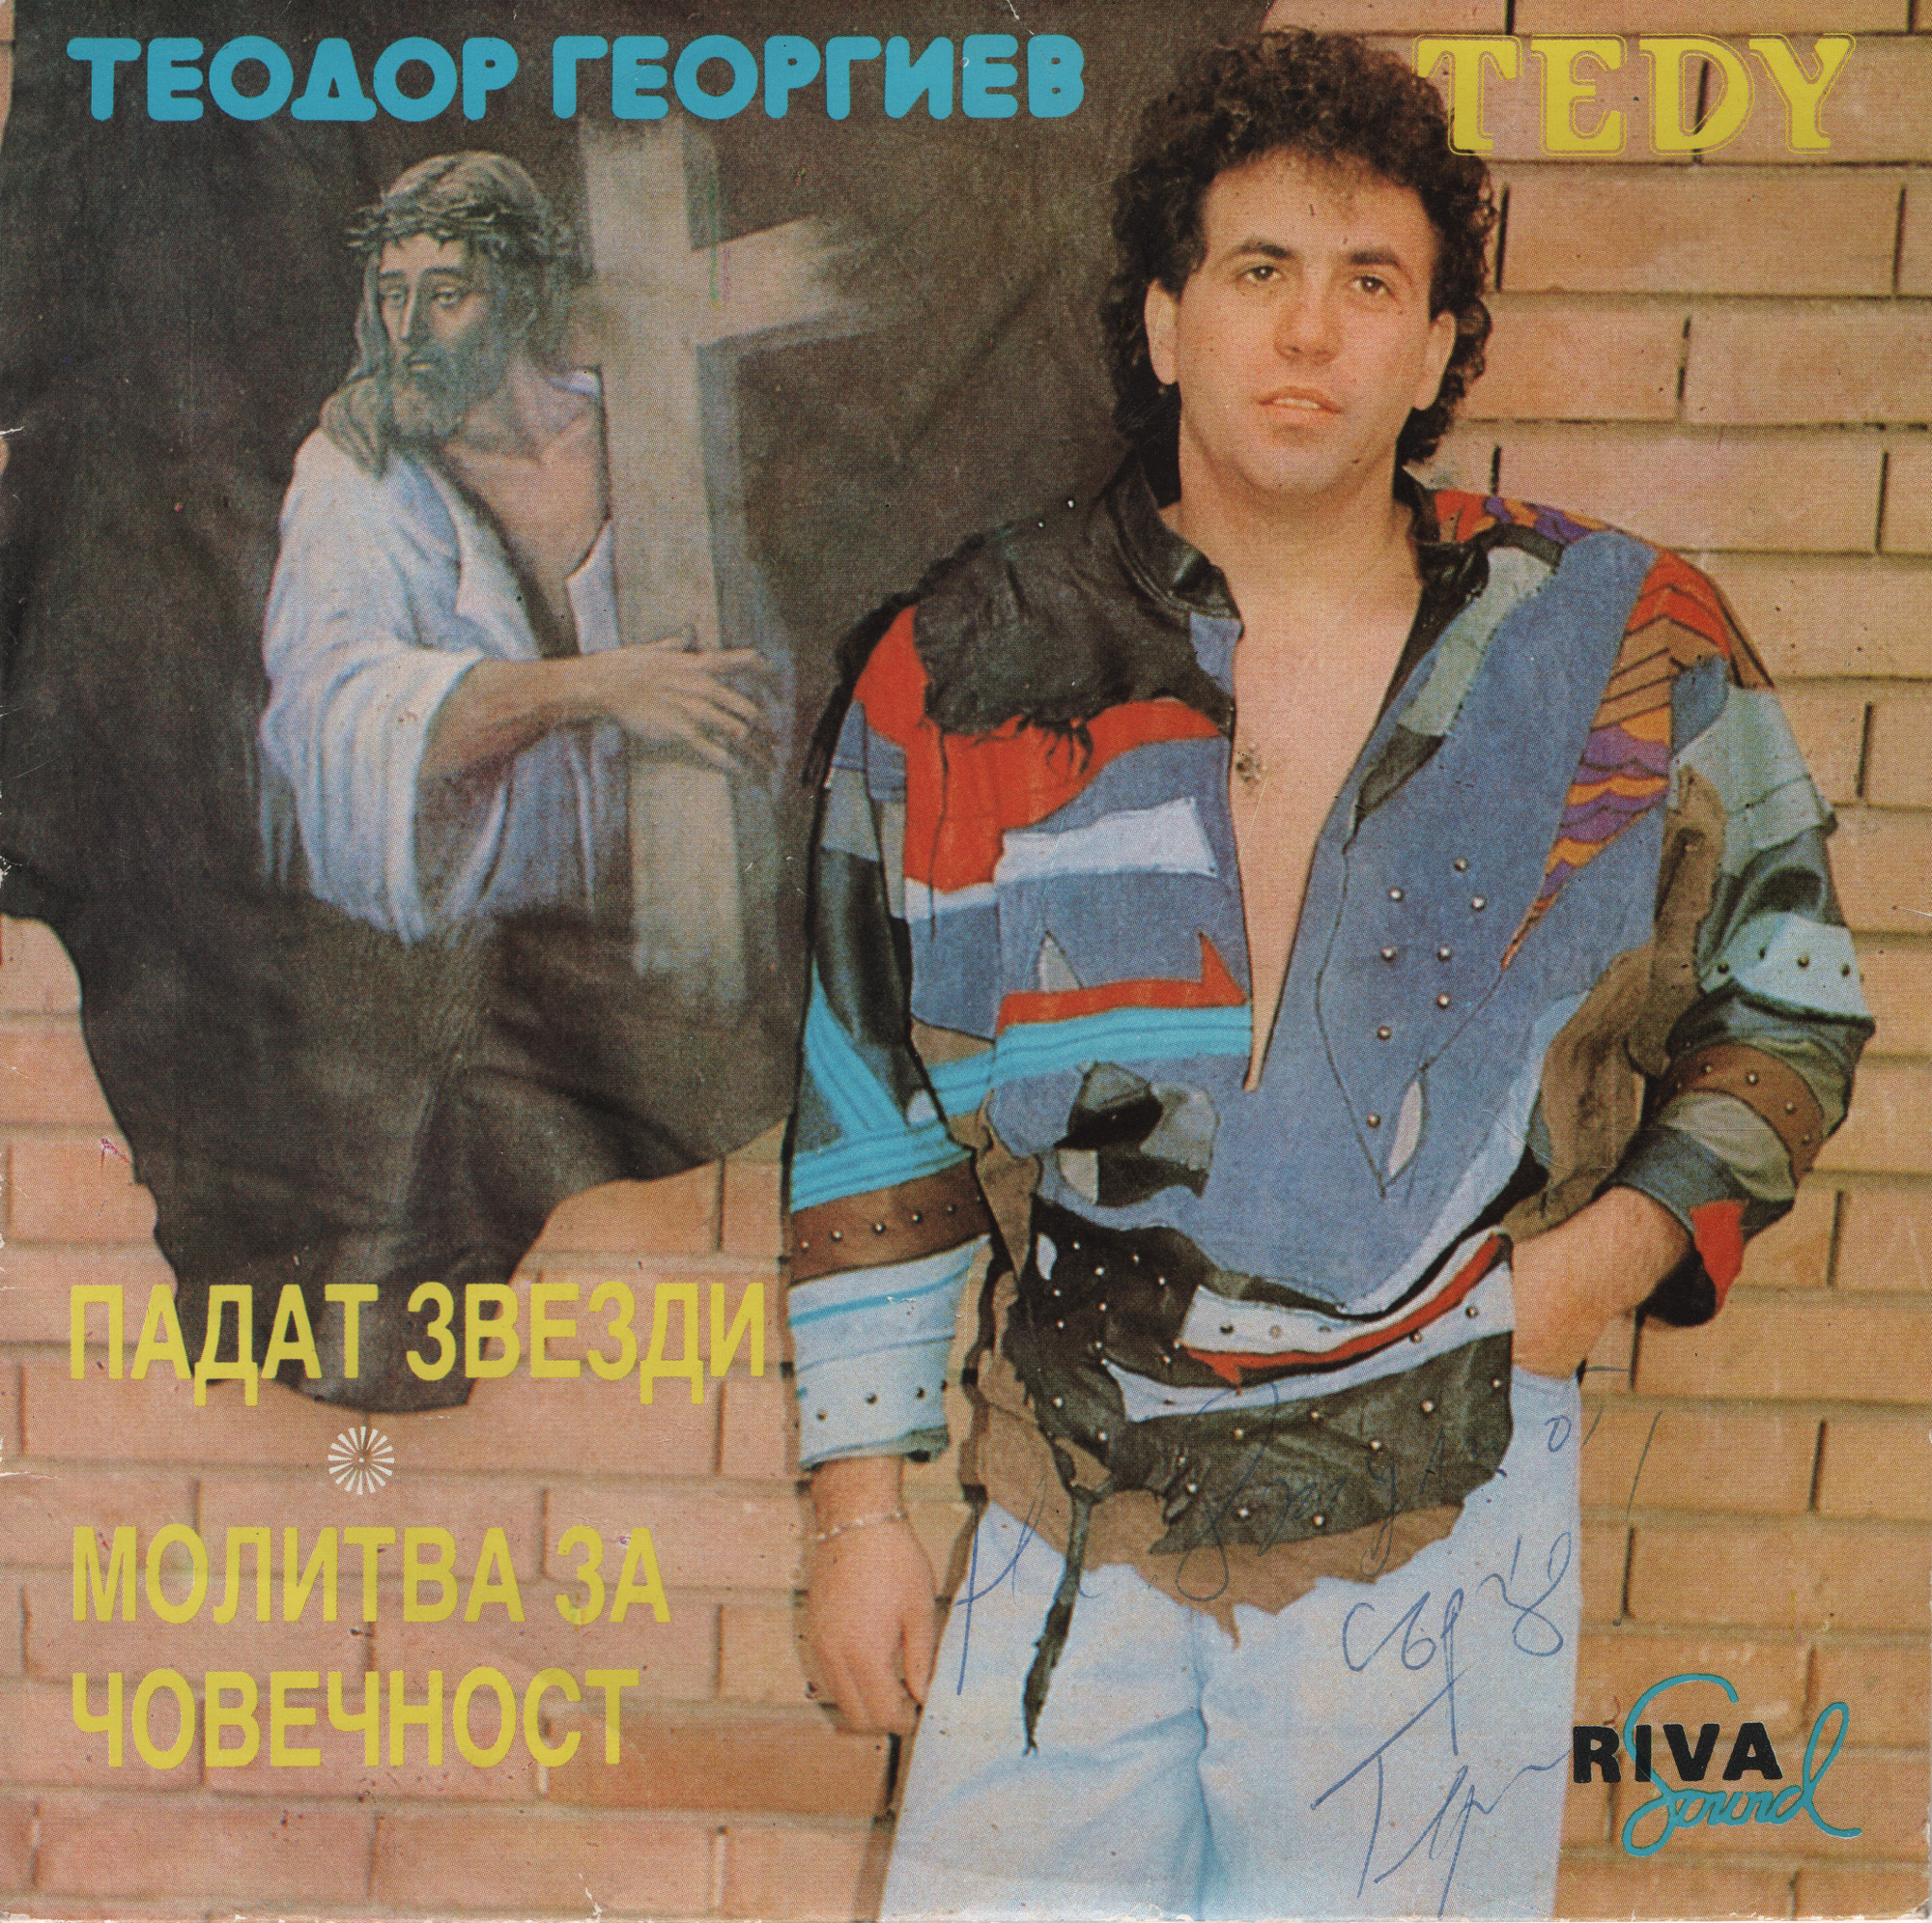 Теодор Георгиев - Tedy